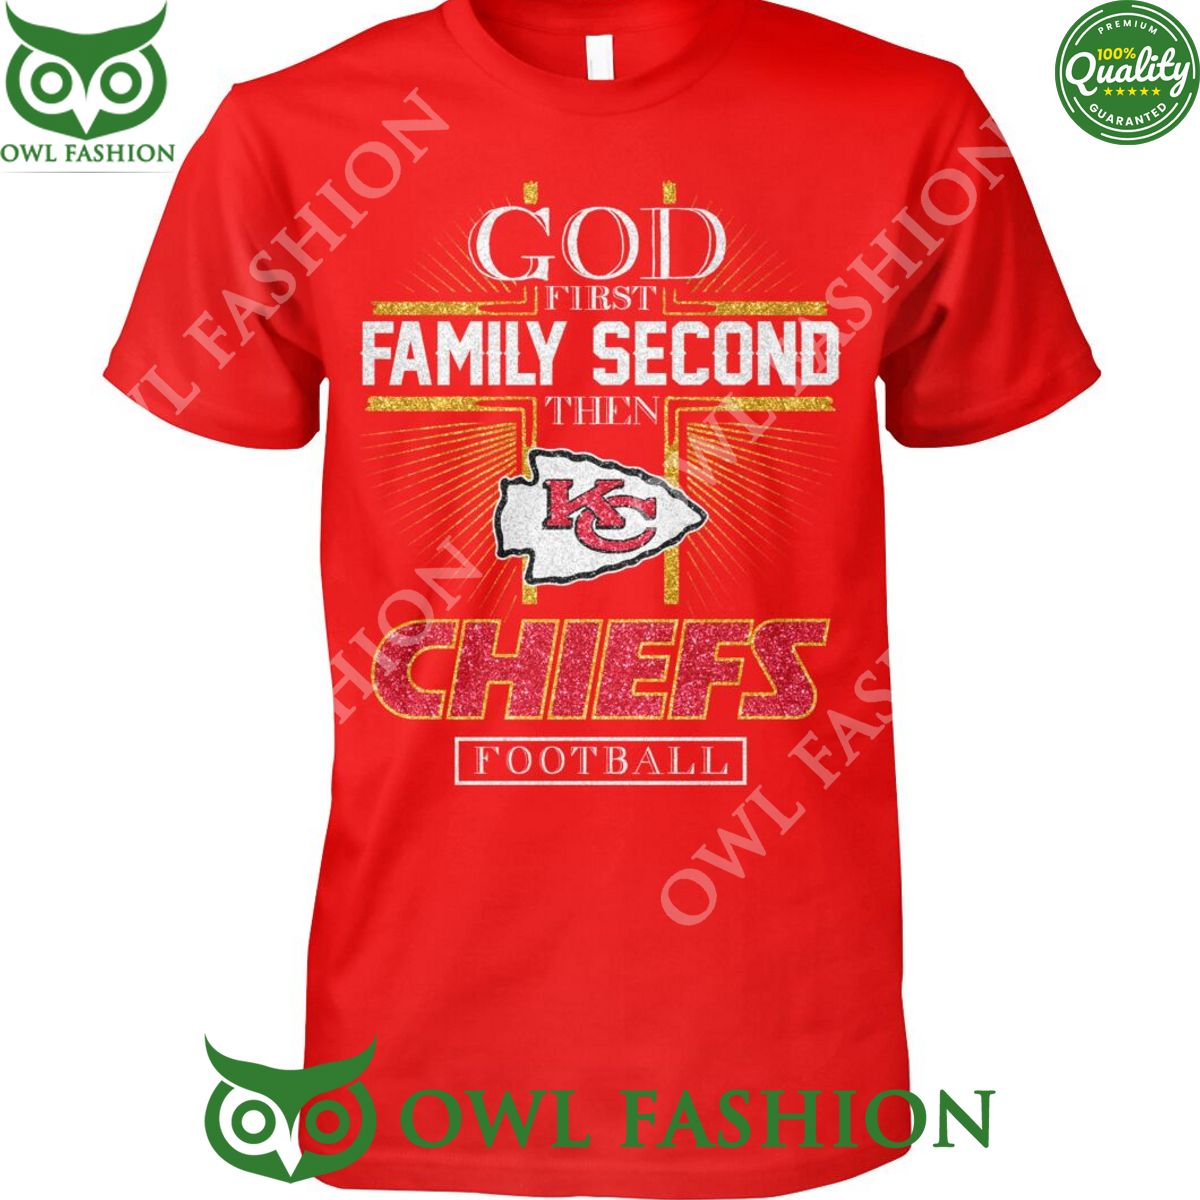 god first family second then kc chiefs football t shirt 1 sxbuo.jpg